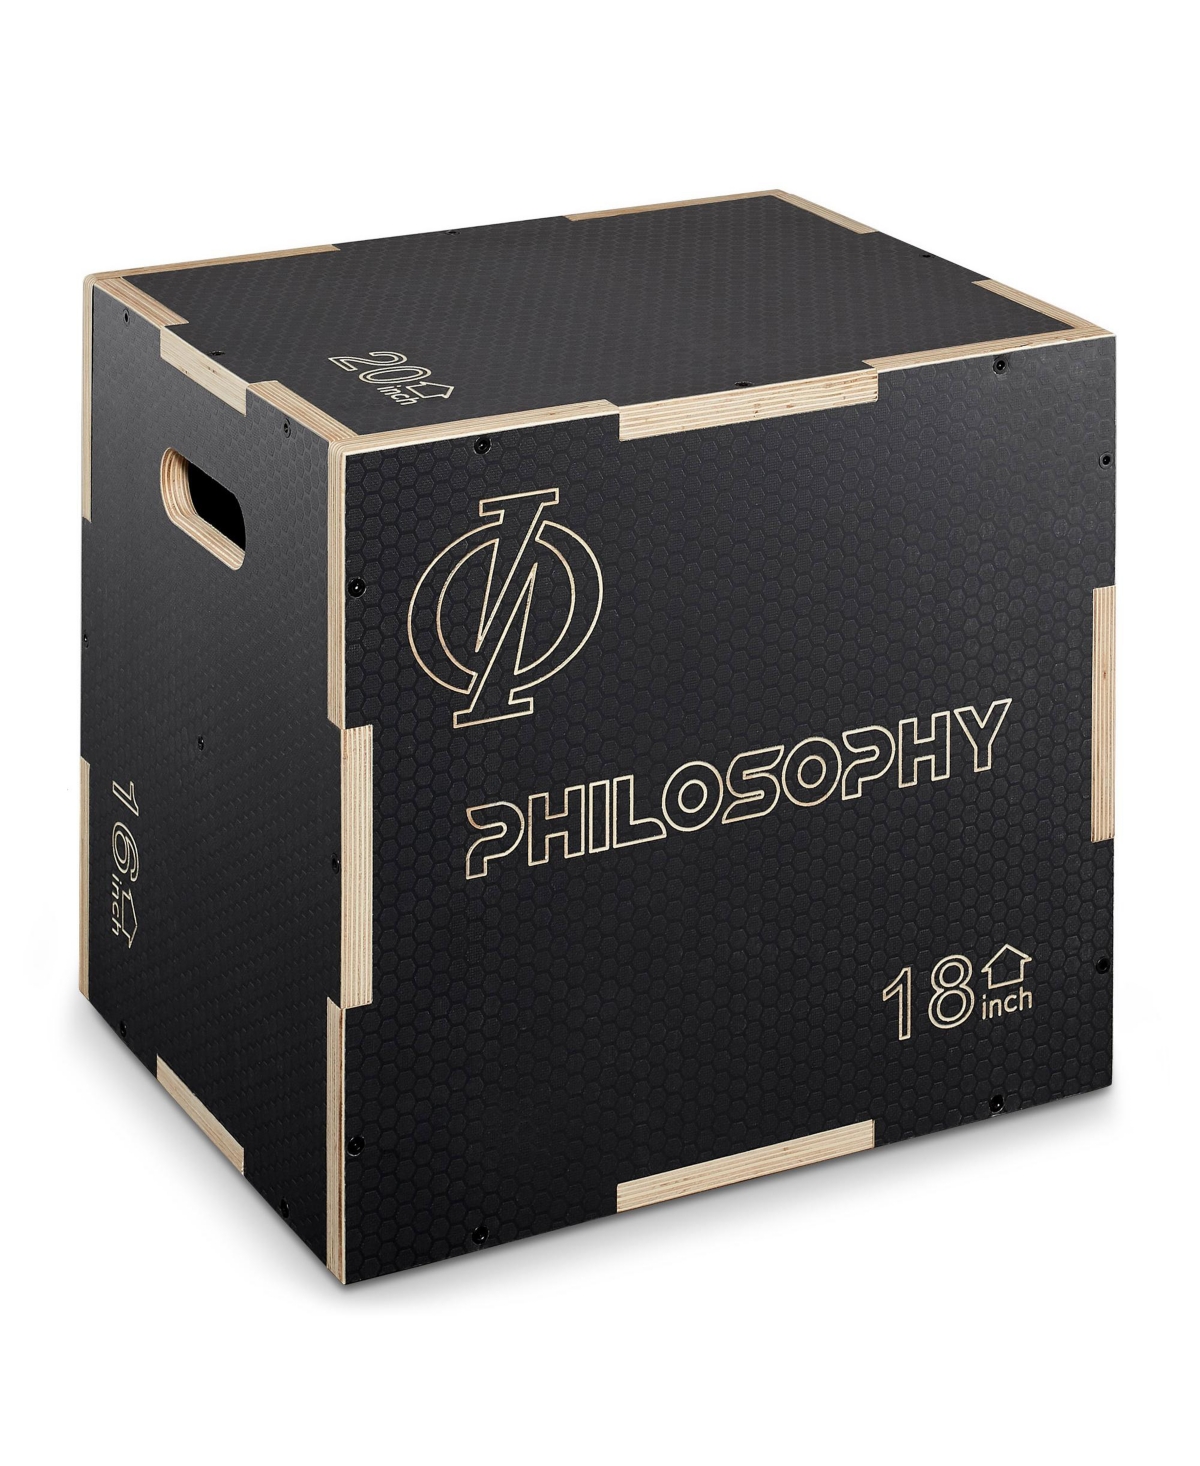 3 in 1 Non-Slip Wood Plyo Box, 20" x 18" x 16", Black, Jump Plyometric Box for Training and Conditioning - Black